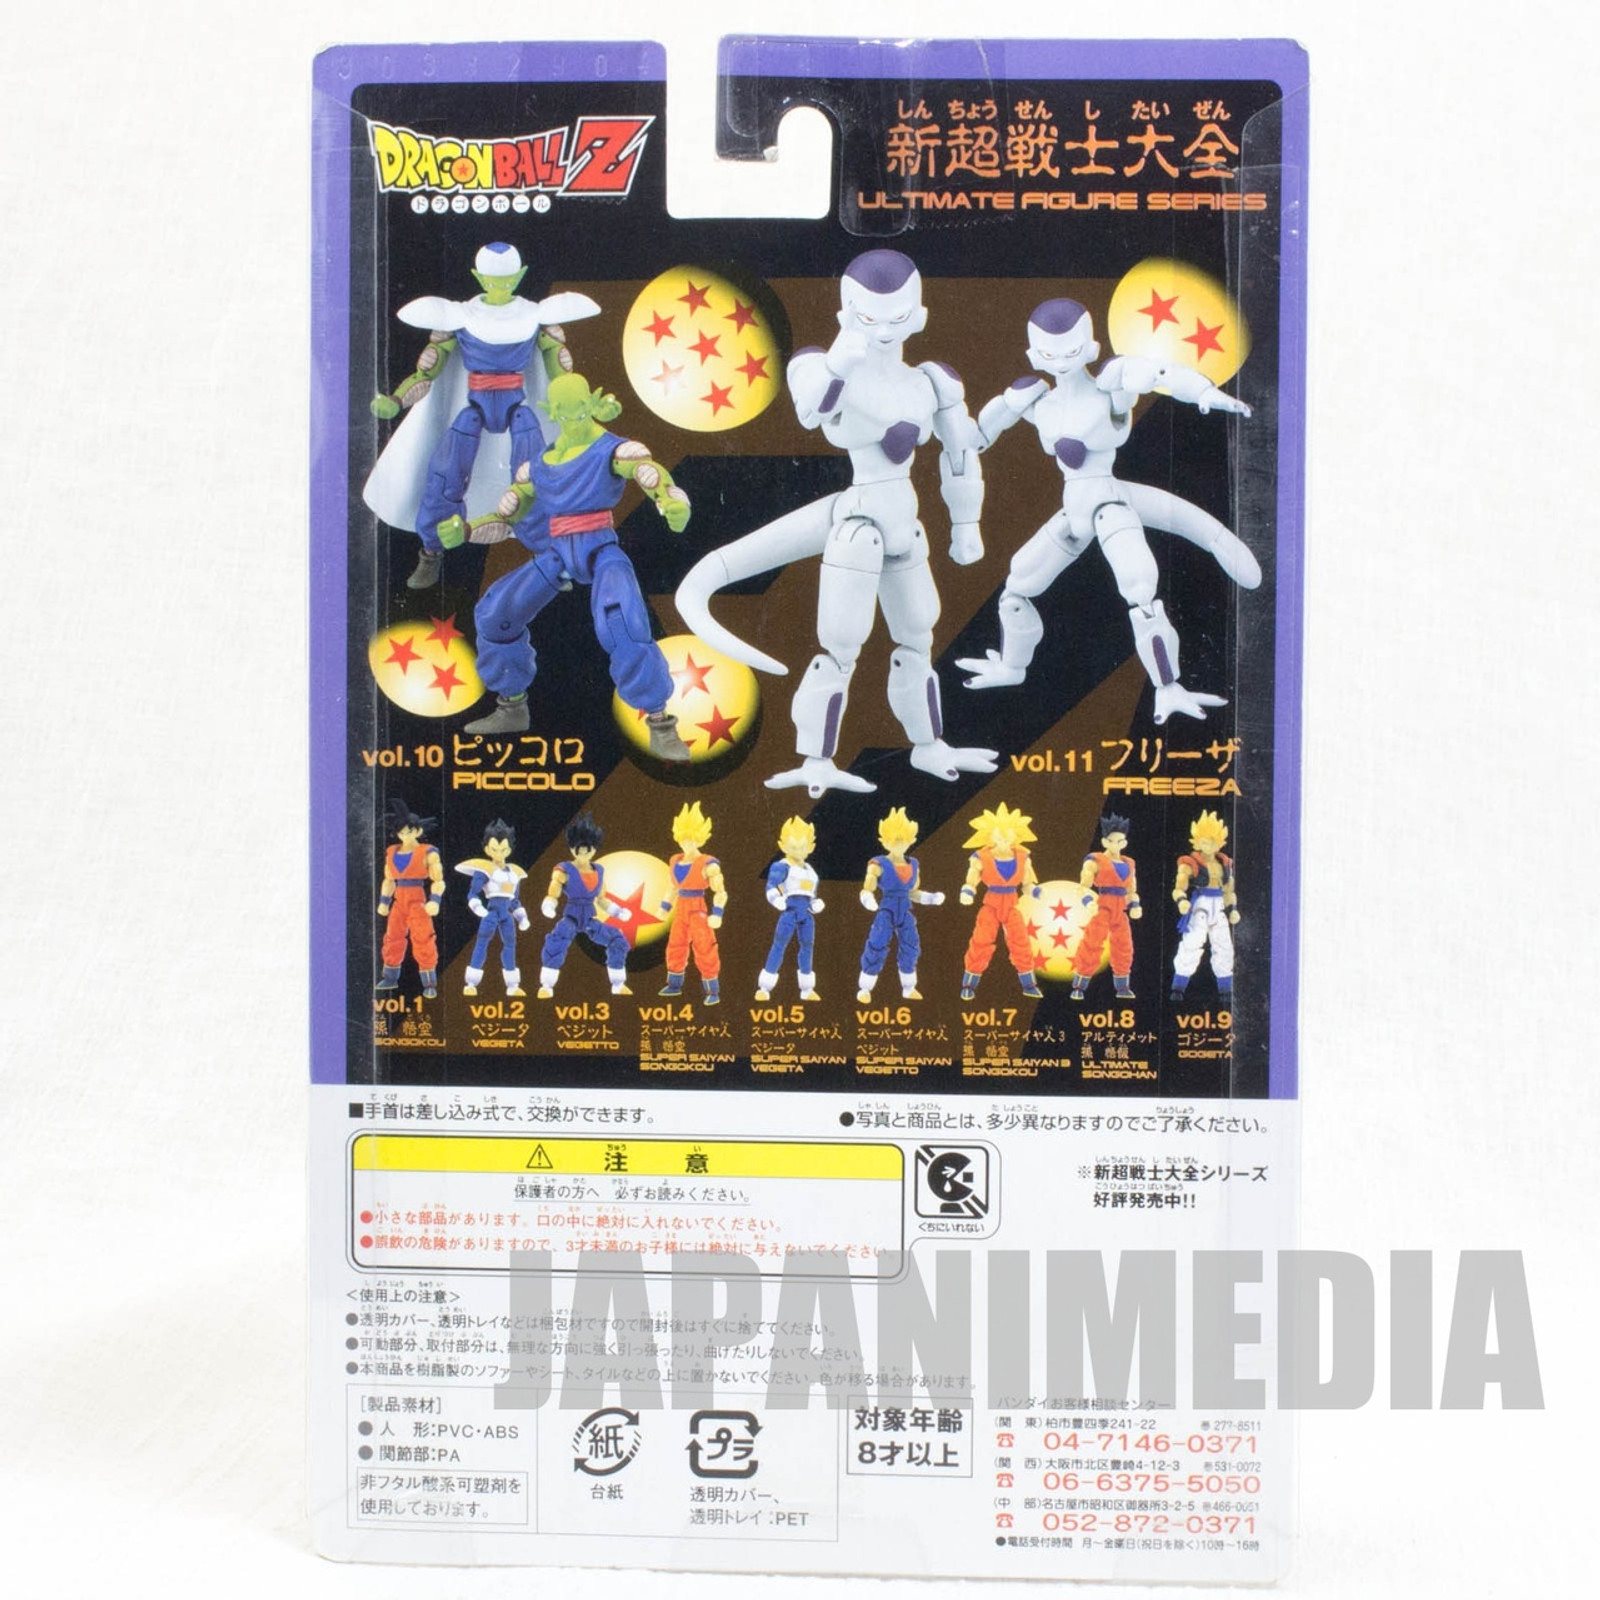 Dragon Ball Z Freeza Ultimate Figure Full Action Bandai JAPAN ANIME MANGA